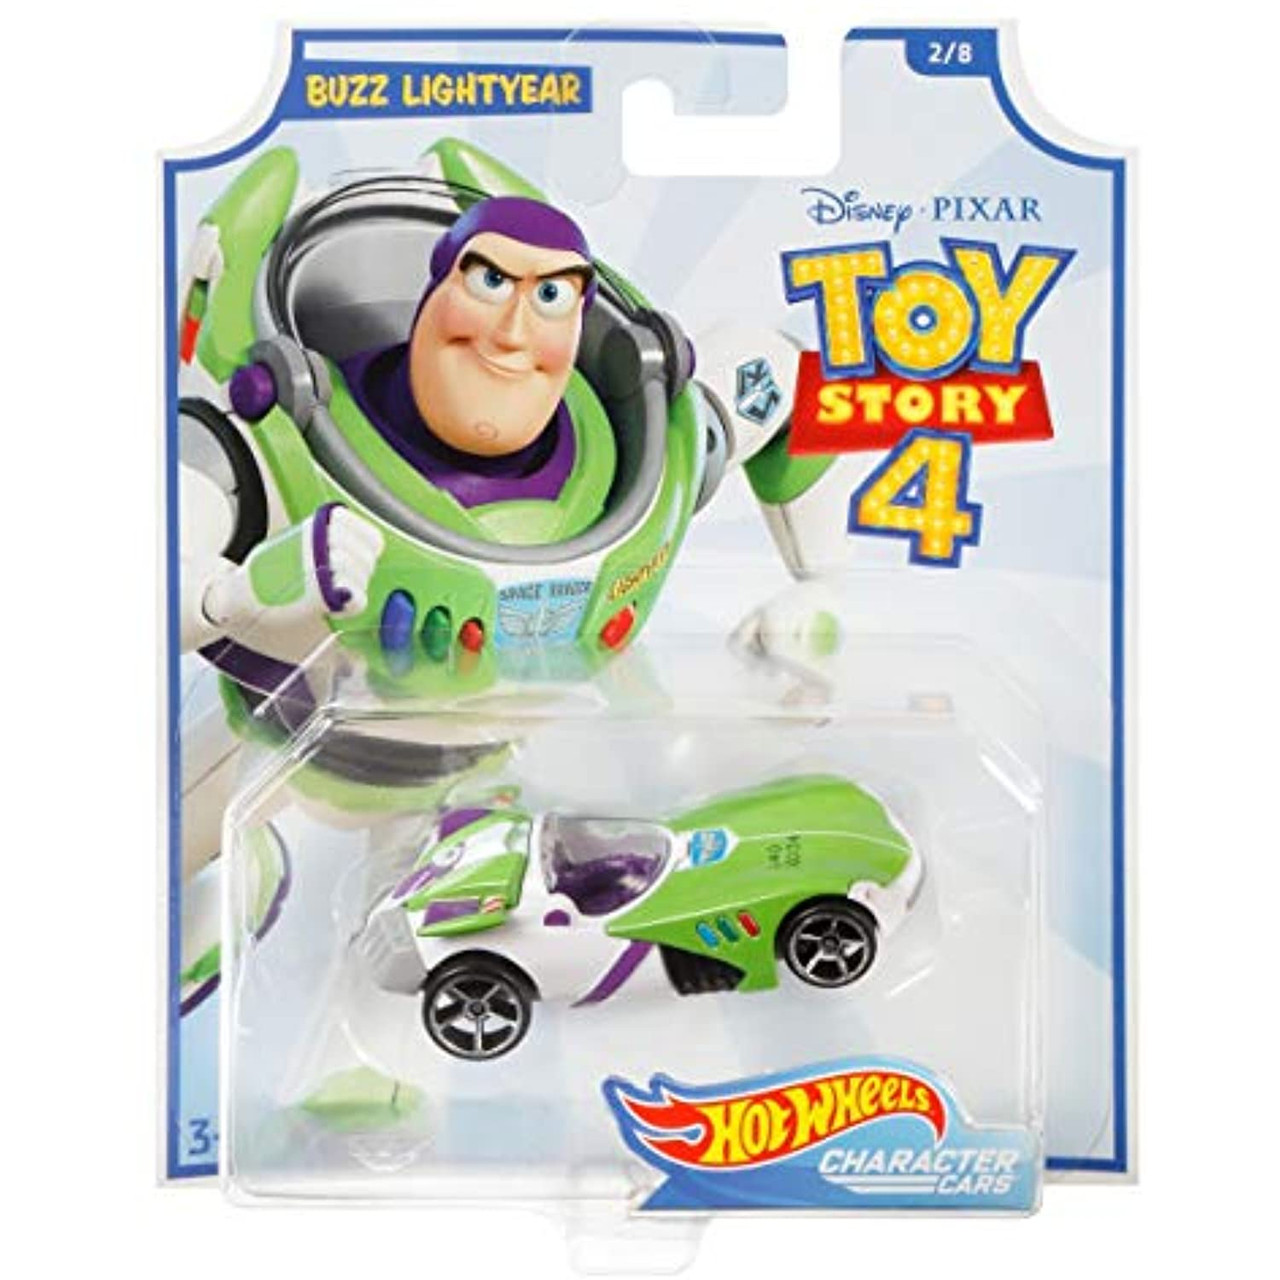 Hot Wheels Disney Pixar Toy Story Forky Character Car 